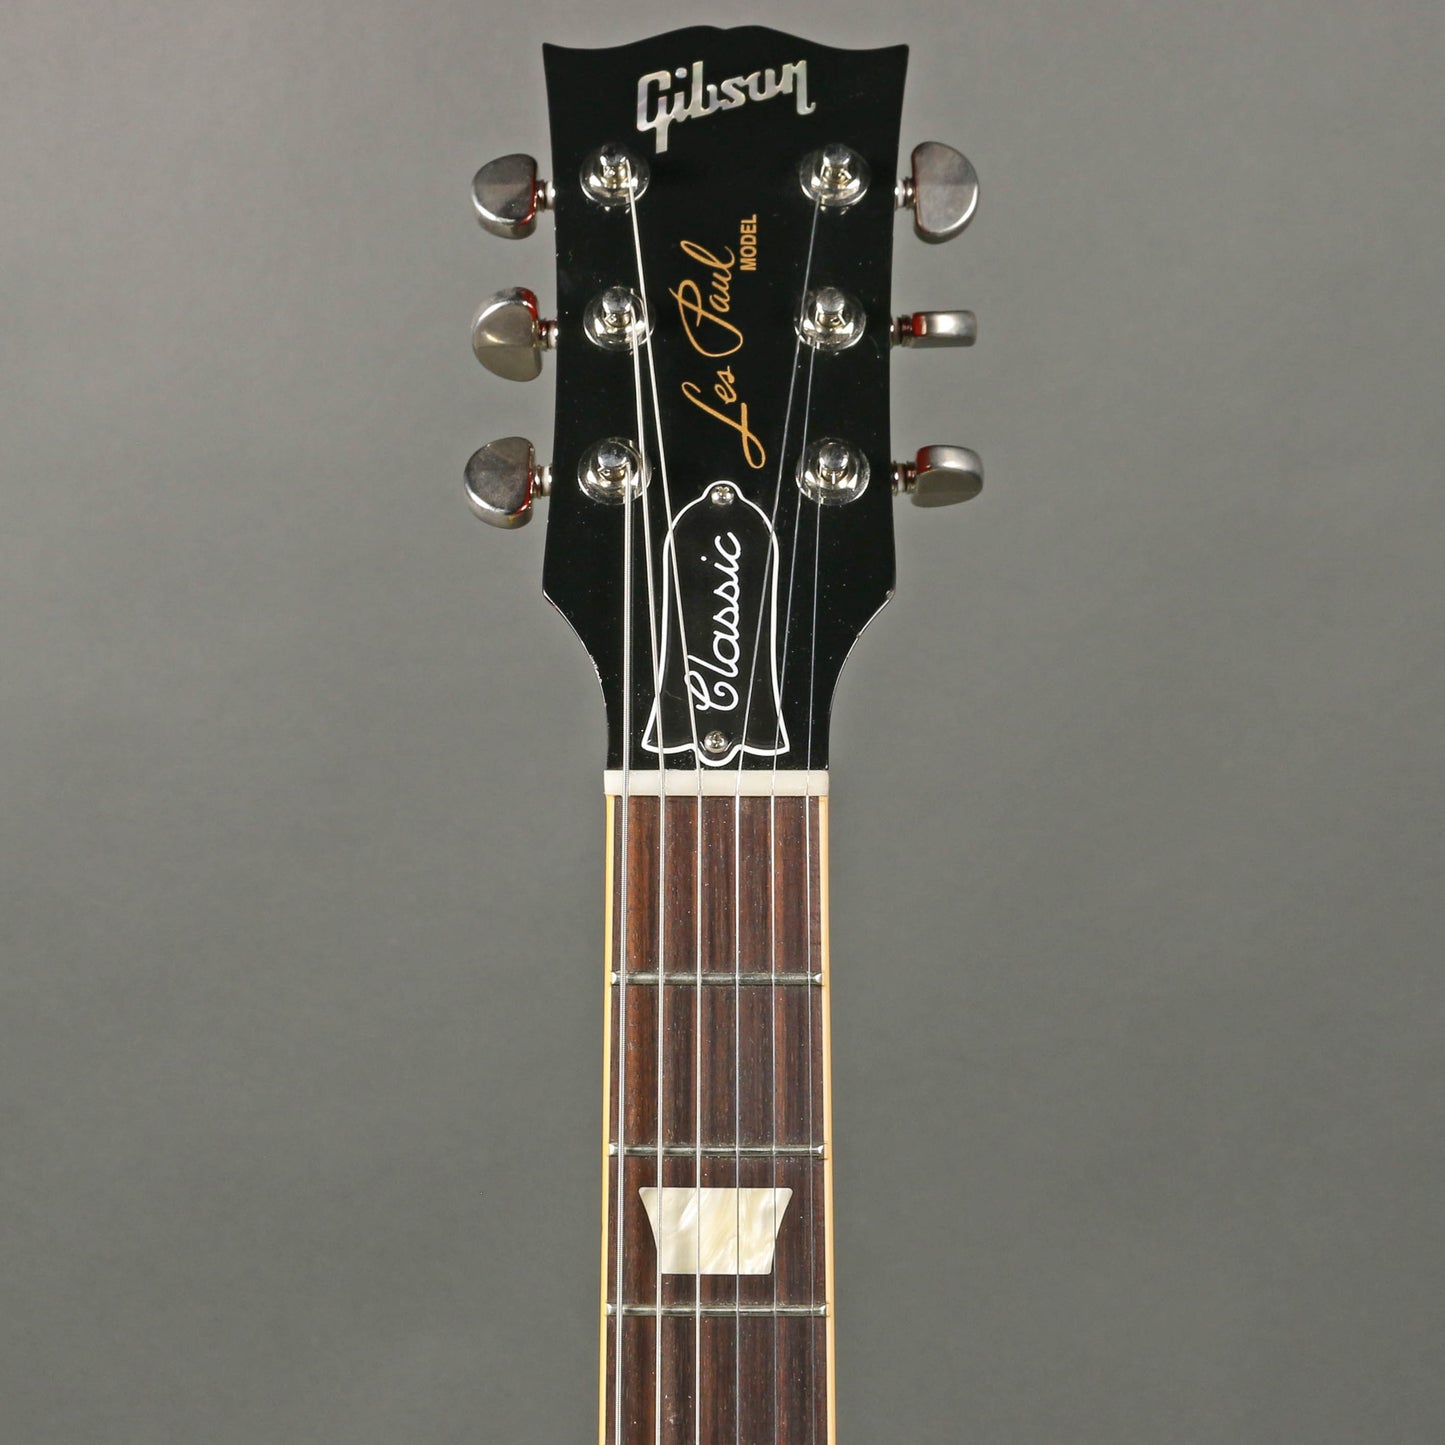 2017 Gibson Les Paul Classic